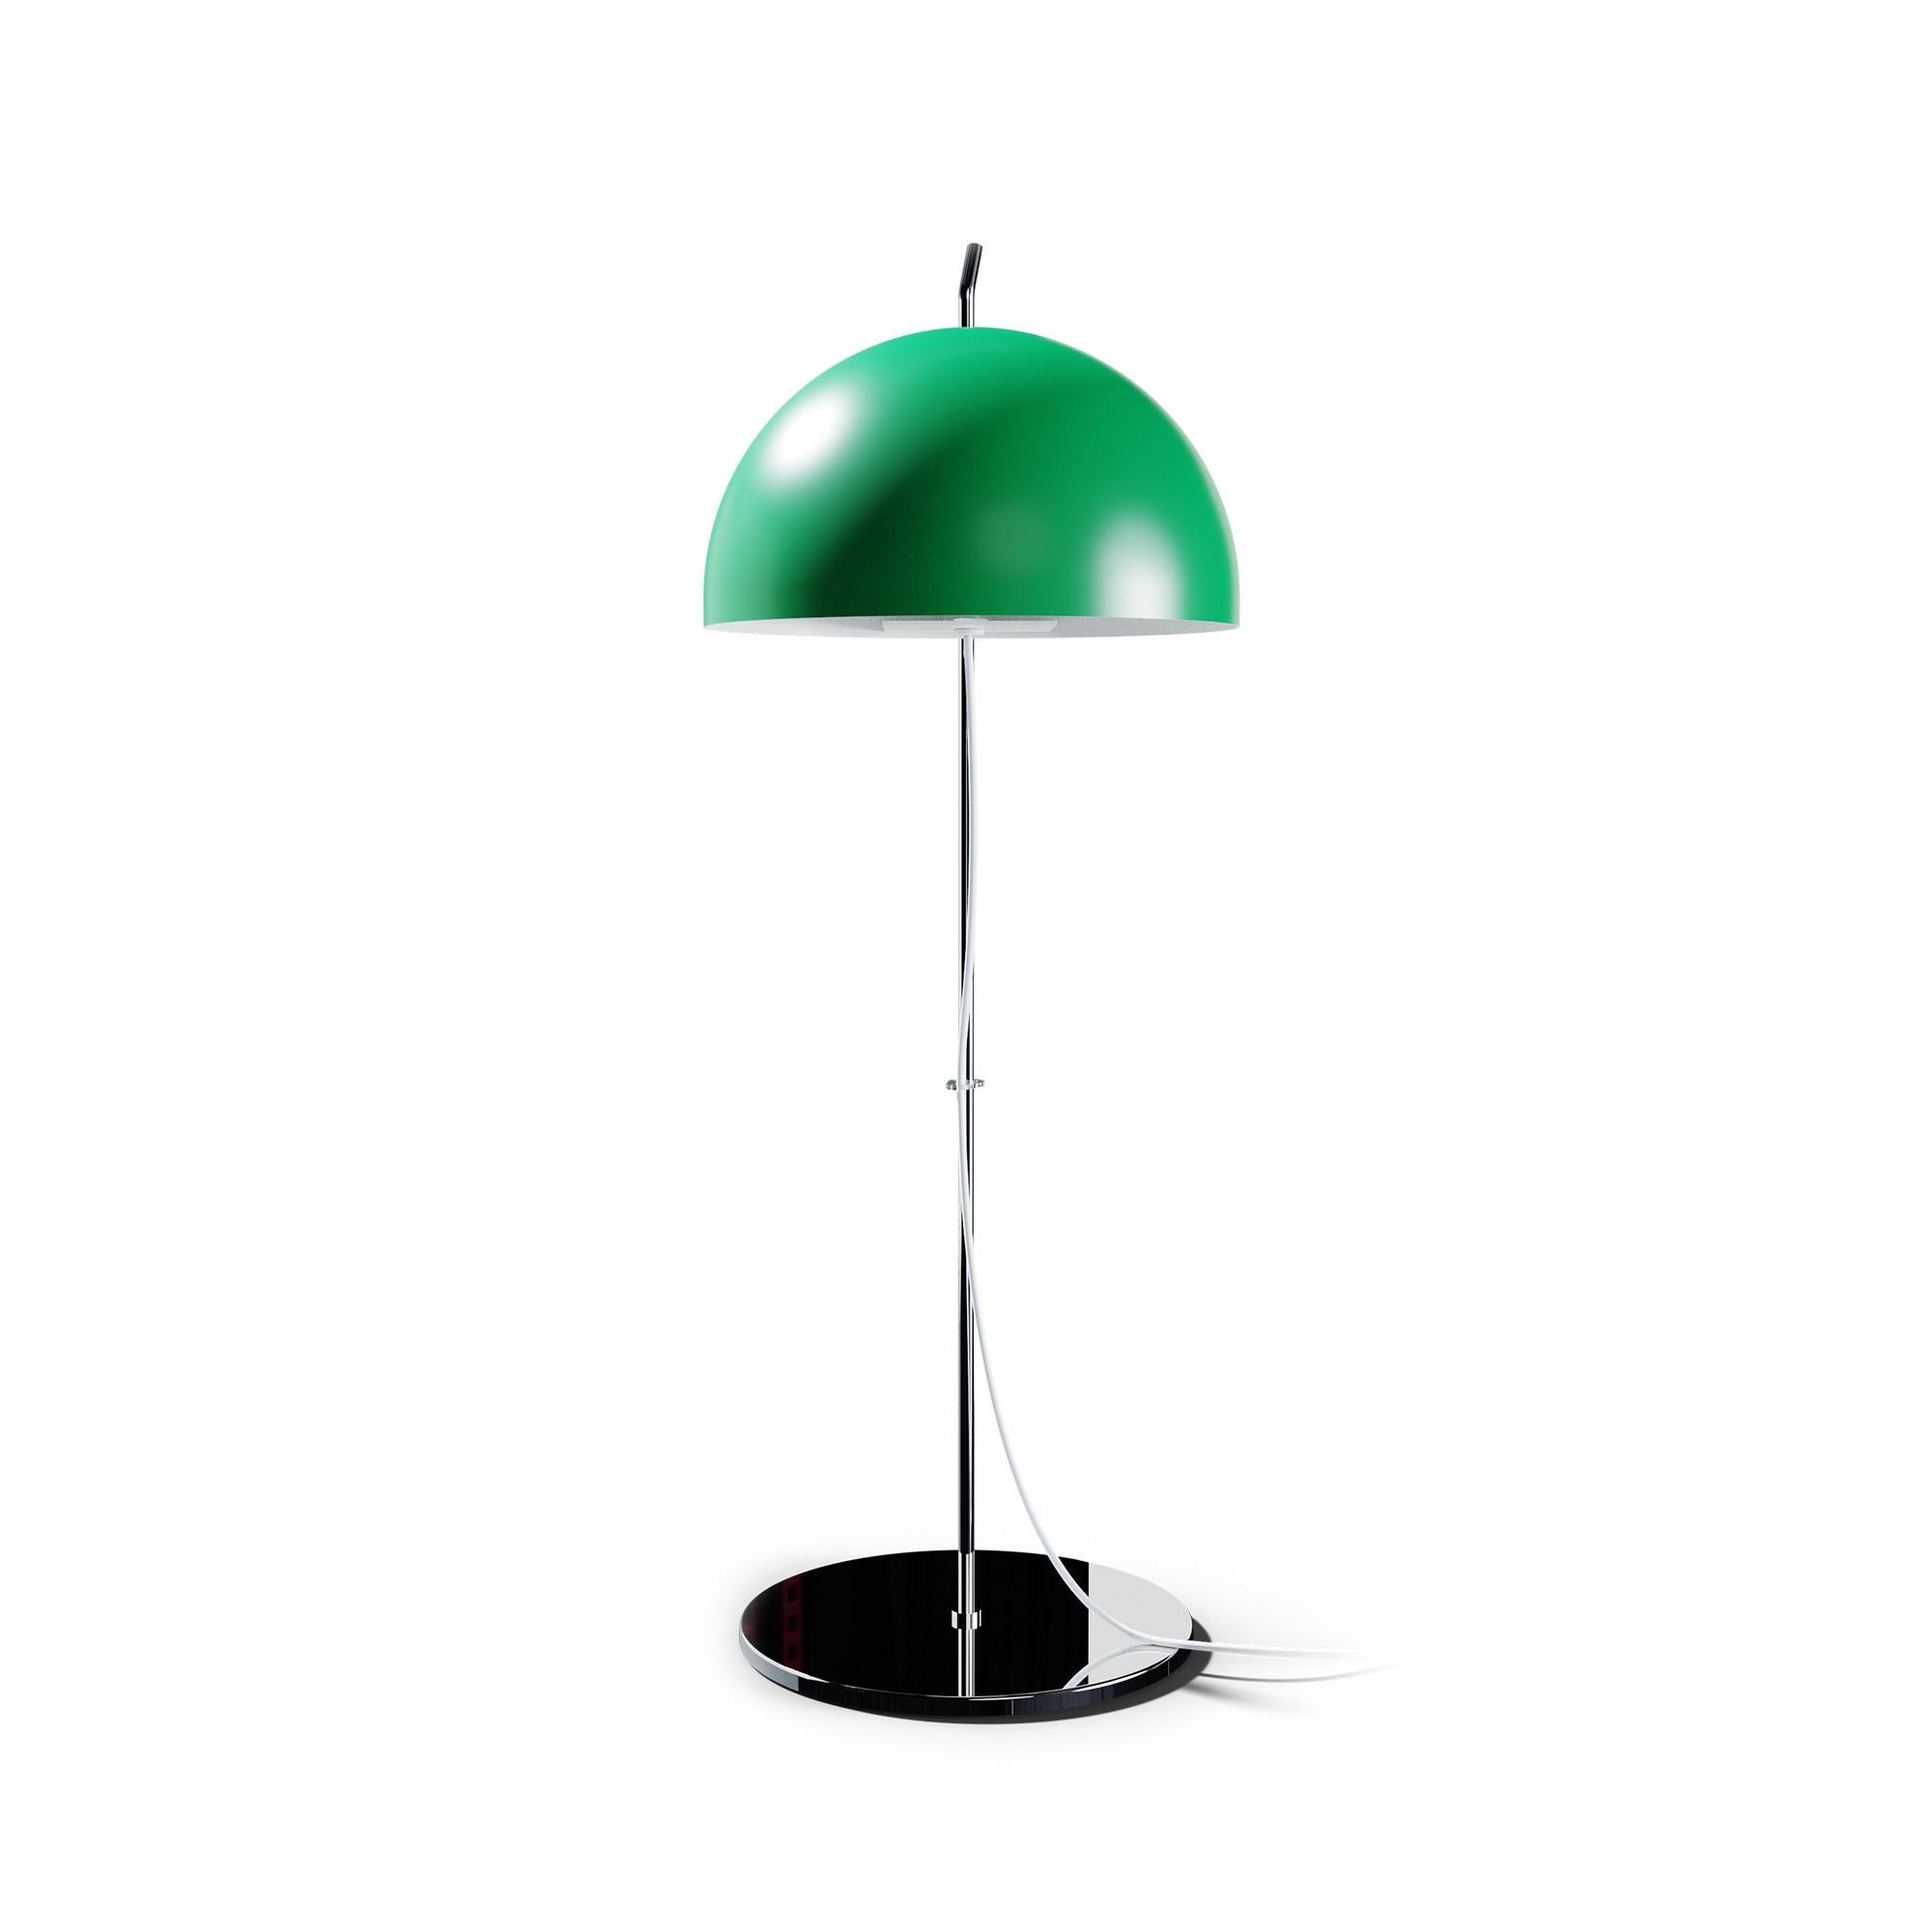 French Alain Richard 'A21' Desk Lamp in Green for Disderot For Sale